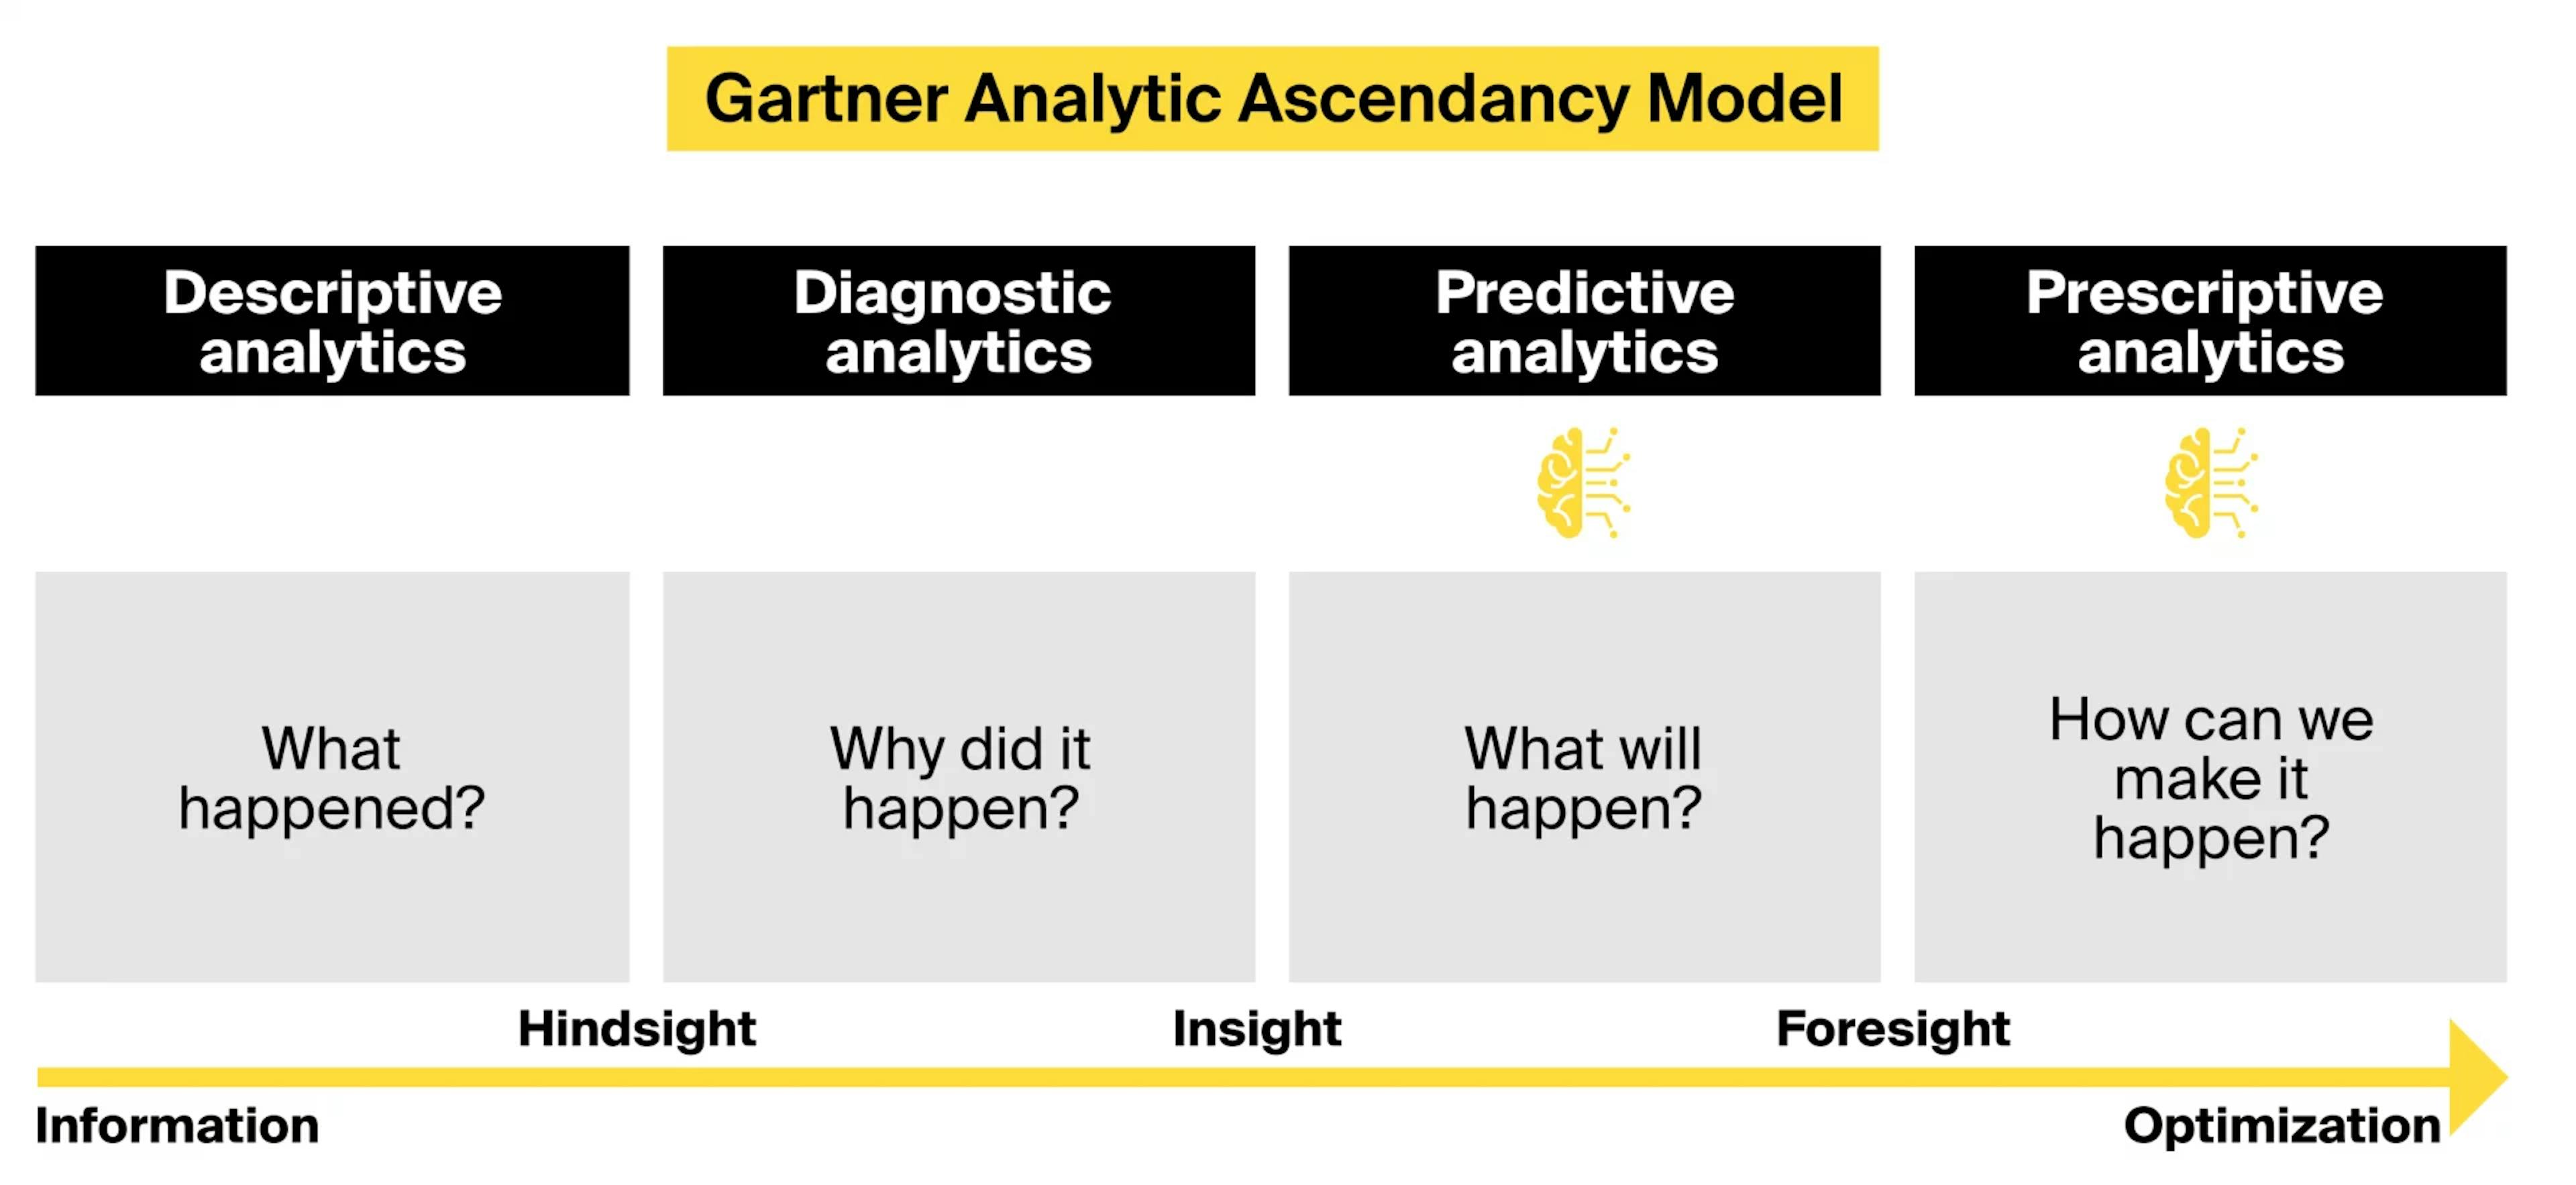 Gartner の Analytic Ascendancy Model によると、データ分析の価値は、適用されるテクノロジーが複雑になるほど増加します。